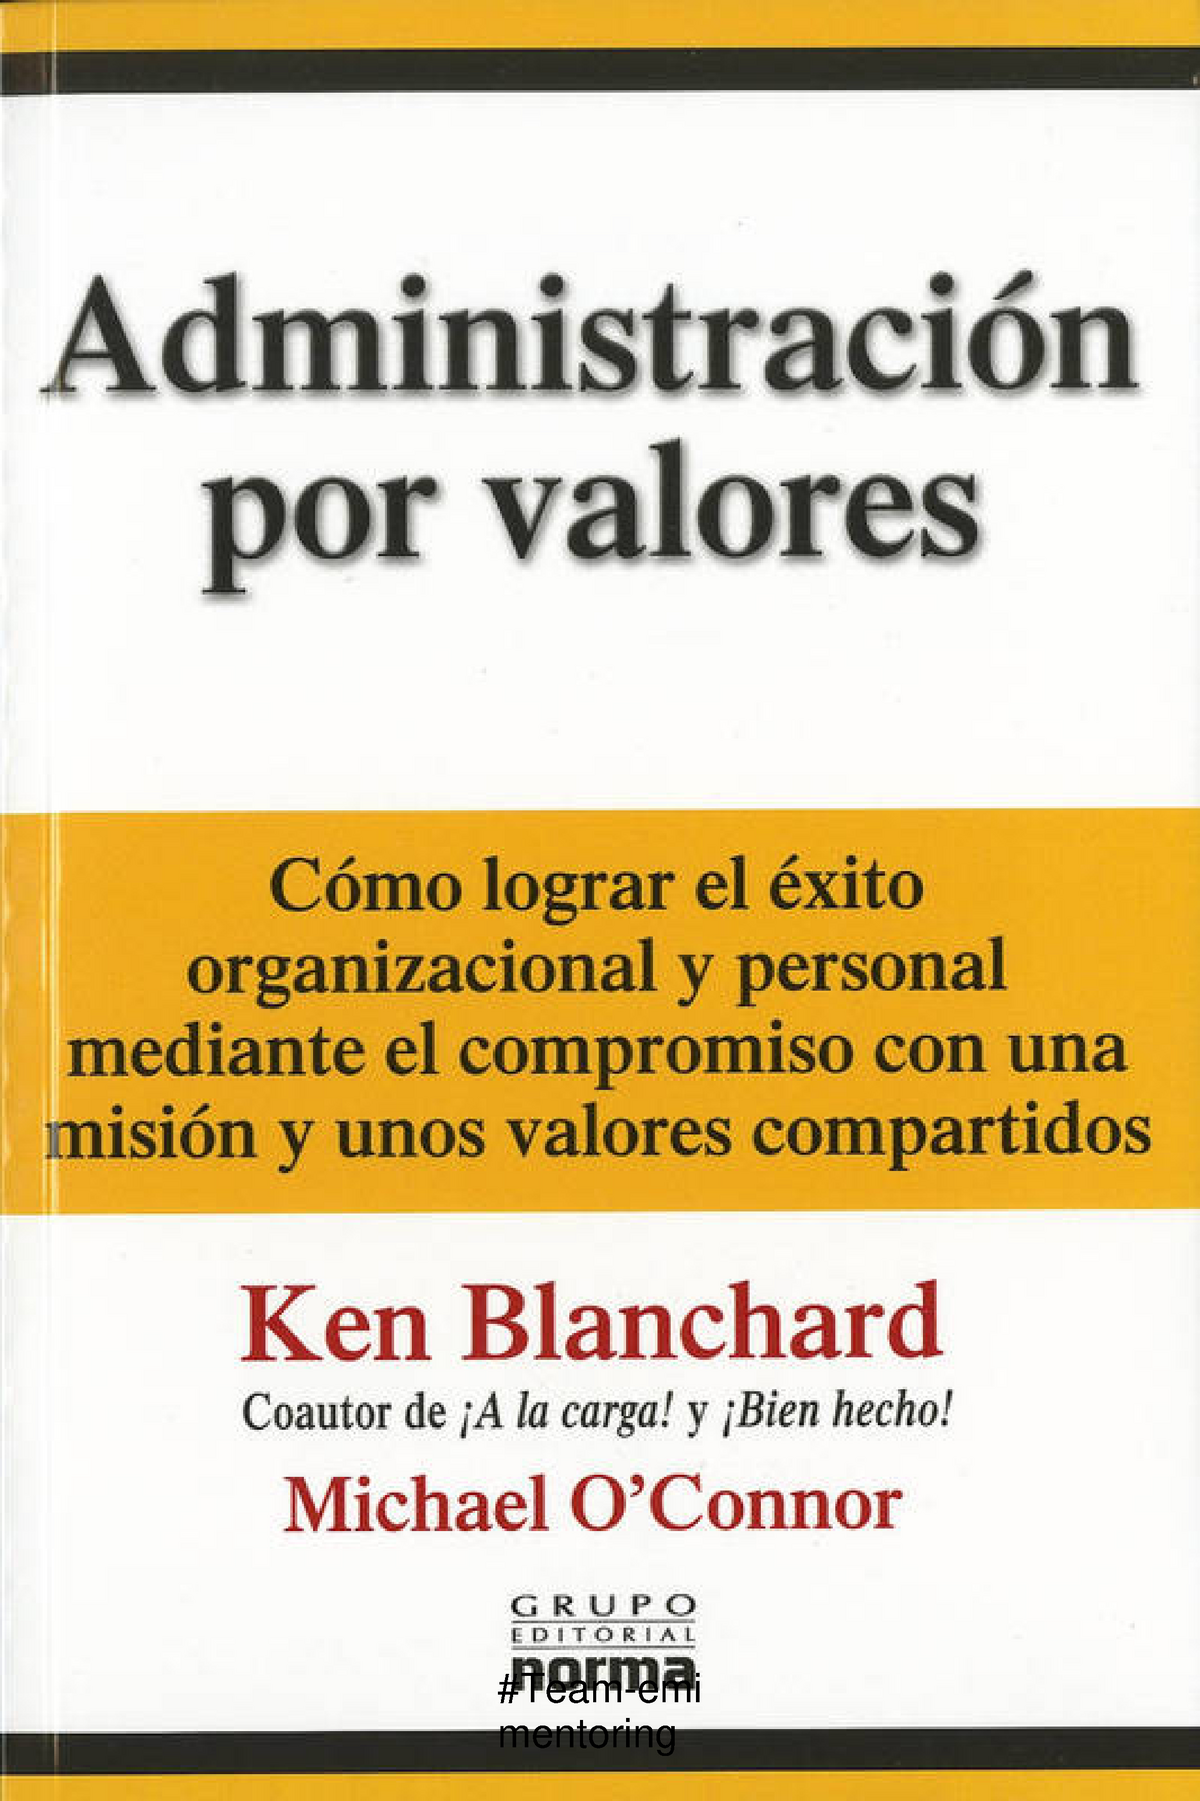 Administracion por valores - Ken Blanchard - #Team-emi ADMINISTRACIÓN POR  VALORES Cómo lograr el - Studocu